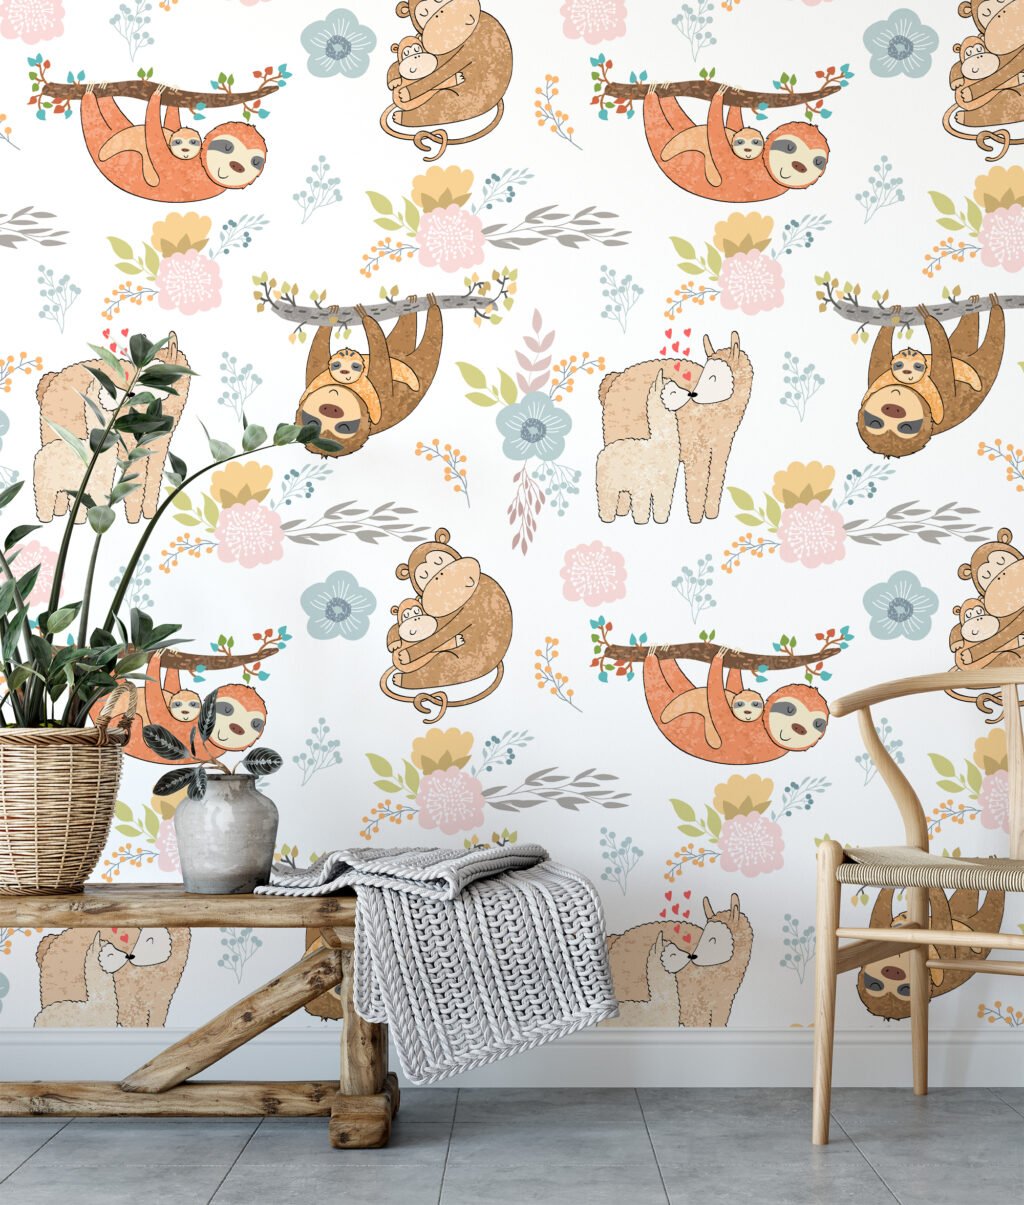 Nursery Animals With Sloths Sheep And Monkeys Illustration Wallpaper, Cozy Animal Peel & Stick Wall Mural